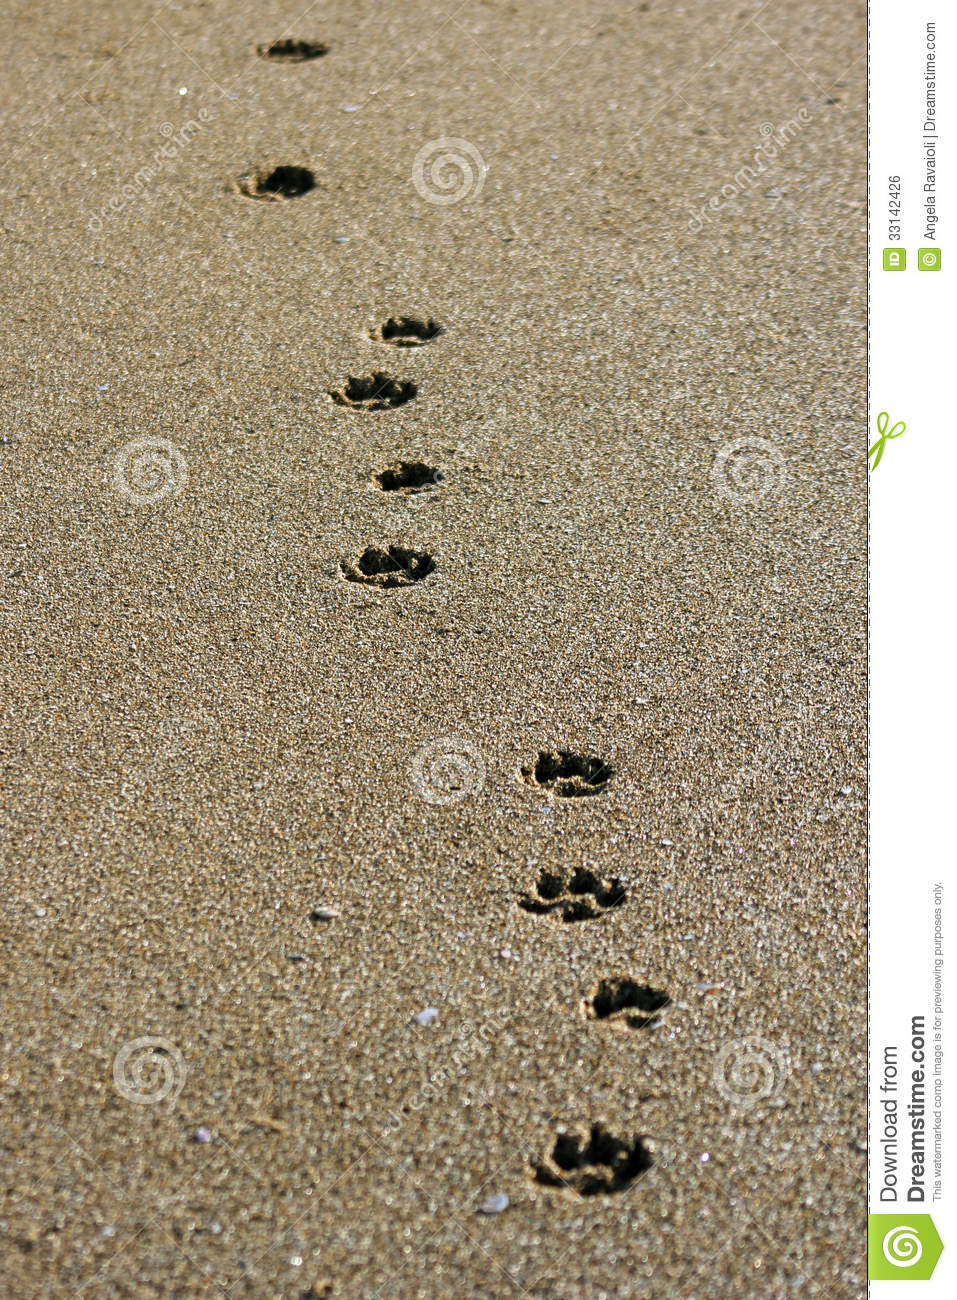 Dog Footprints Royalty Free Stock Image   Image  33142426